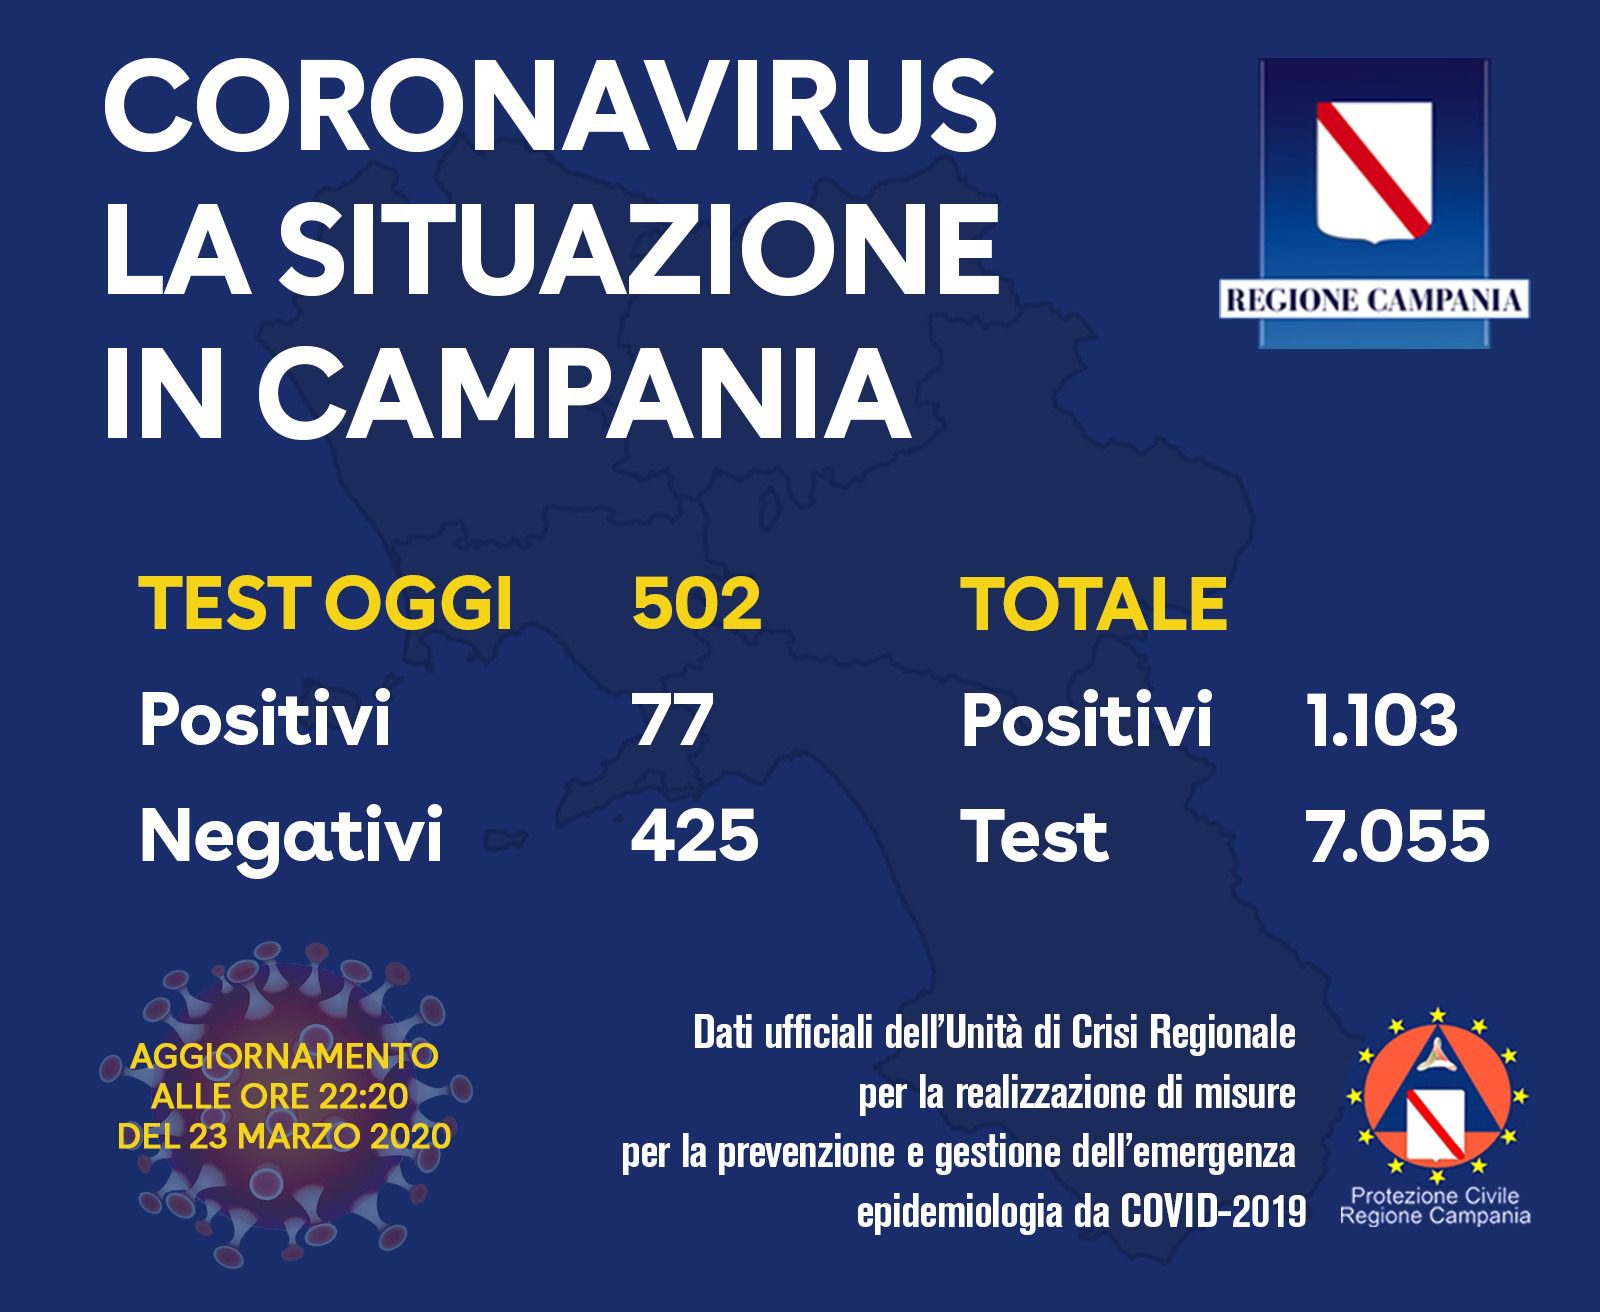 Coronavirus, Campania: sono 1.103 i contagi